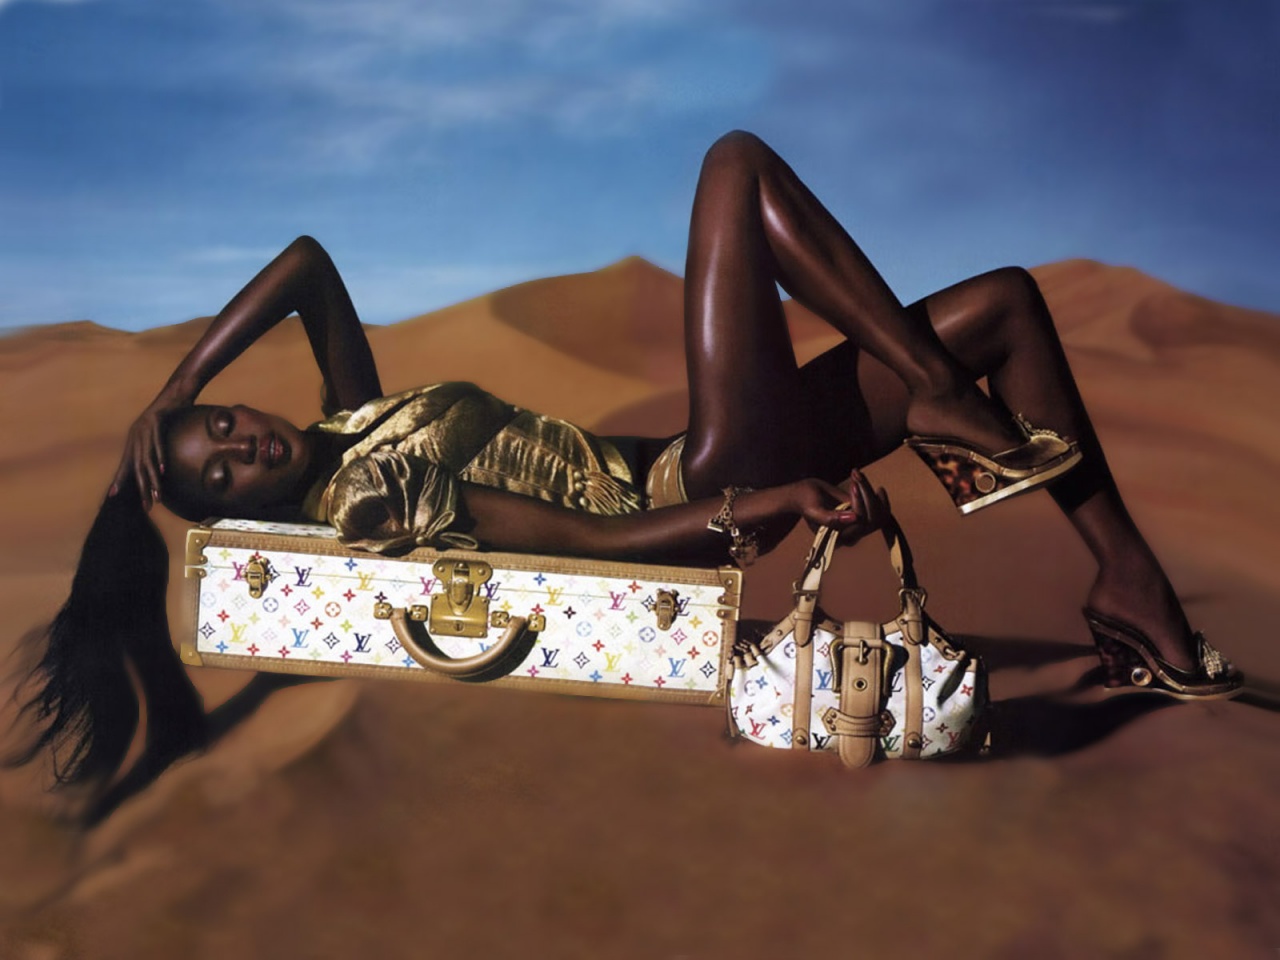 Louis Vuitton: Fashion in the Desert